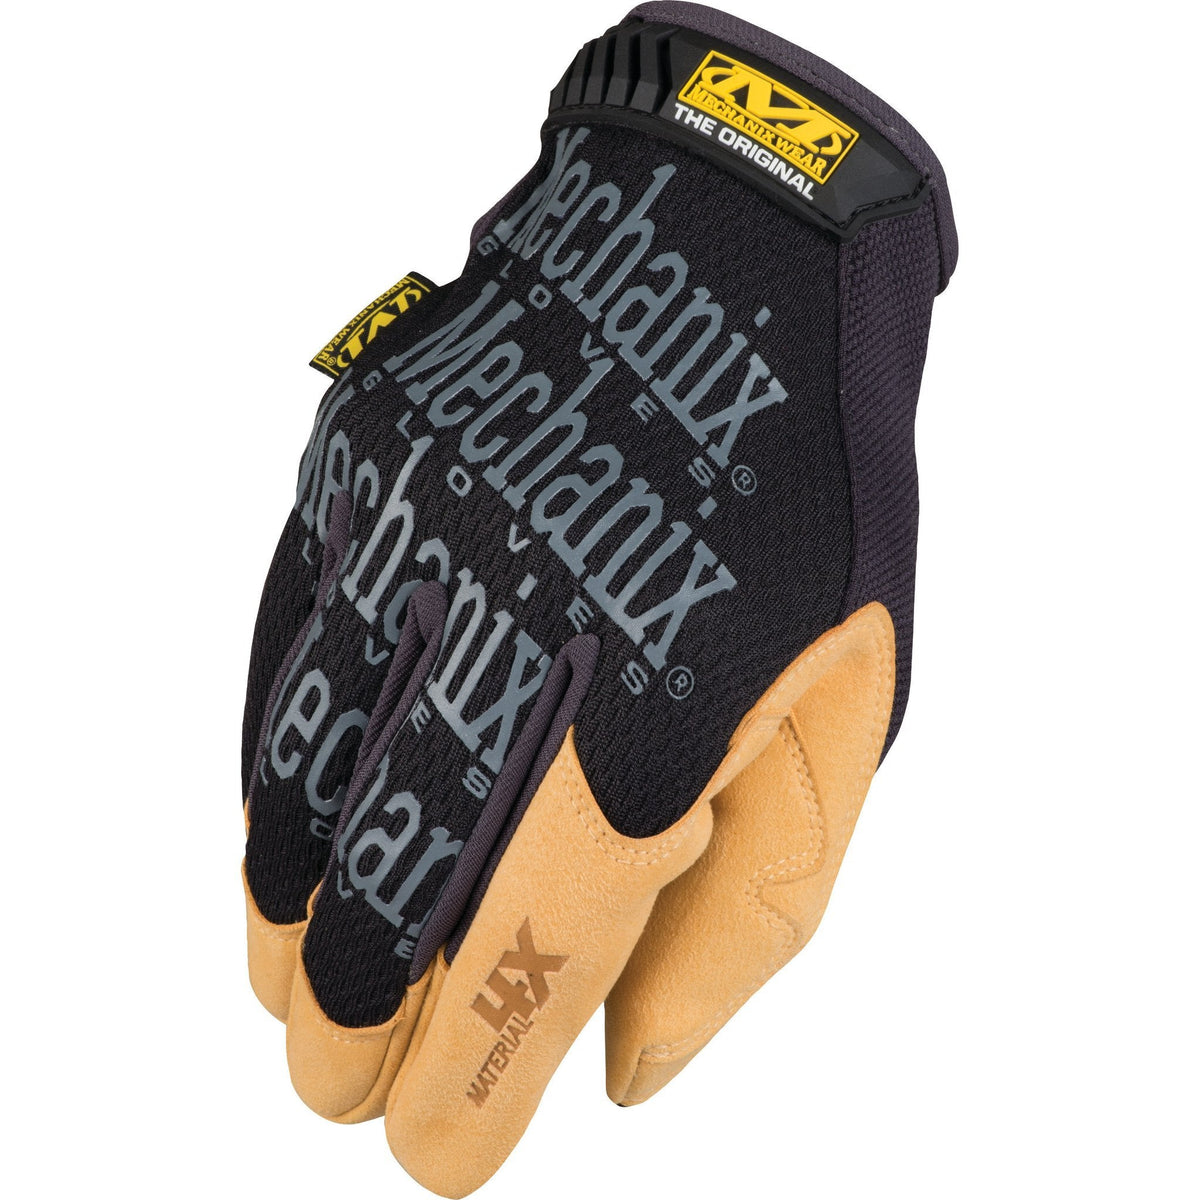 Mechanix Wear The Original Material4X Abrasion Resistant Glove - Medium